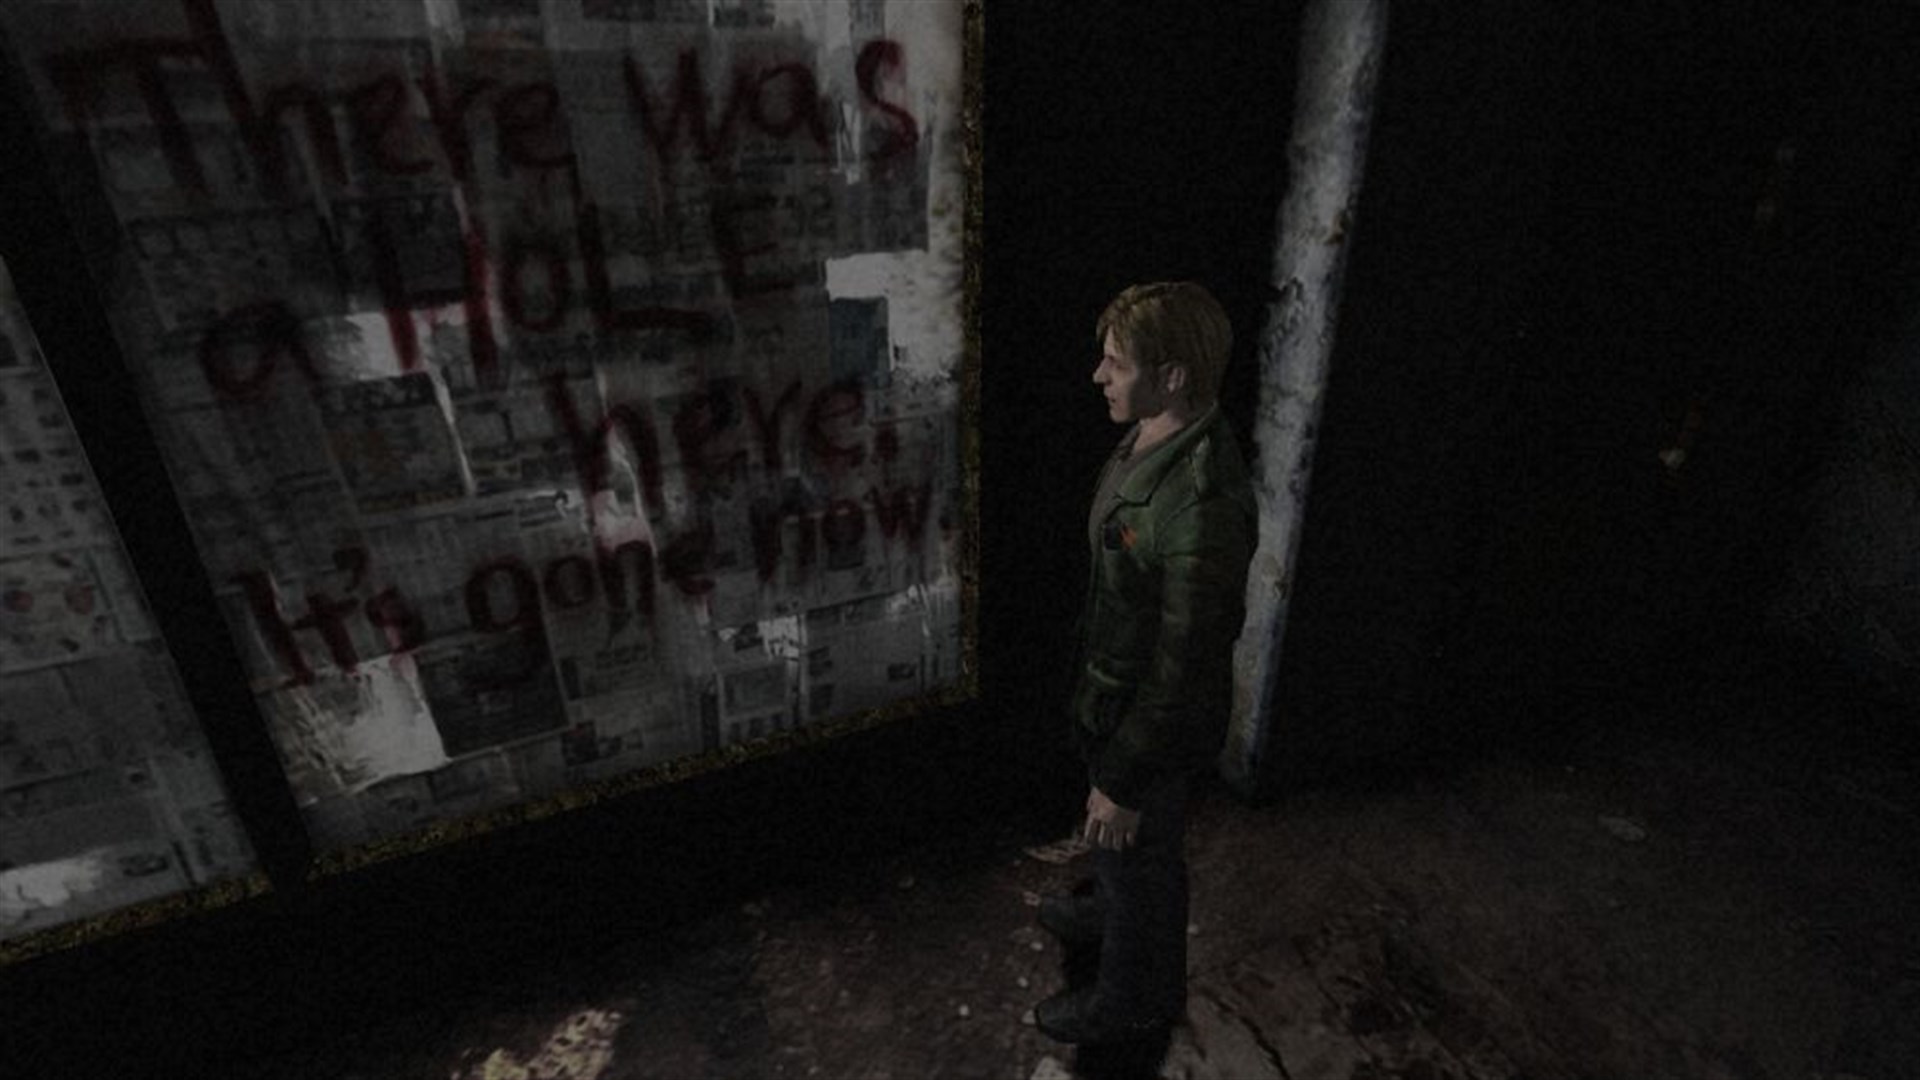 Silent Hill 2 Xbox